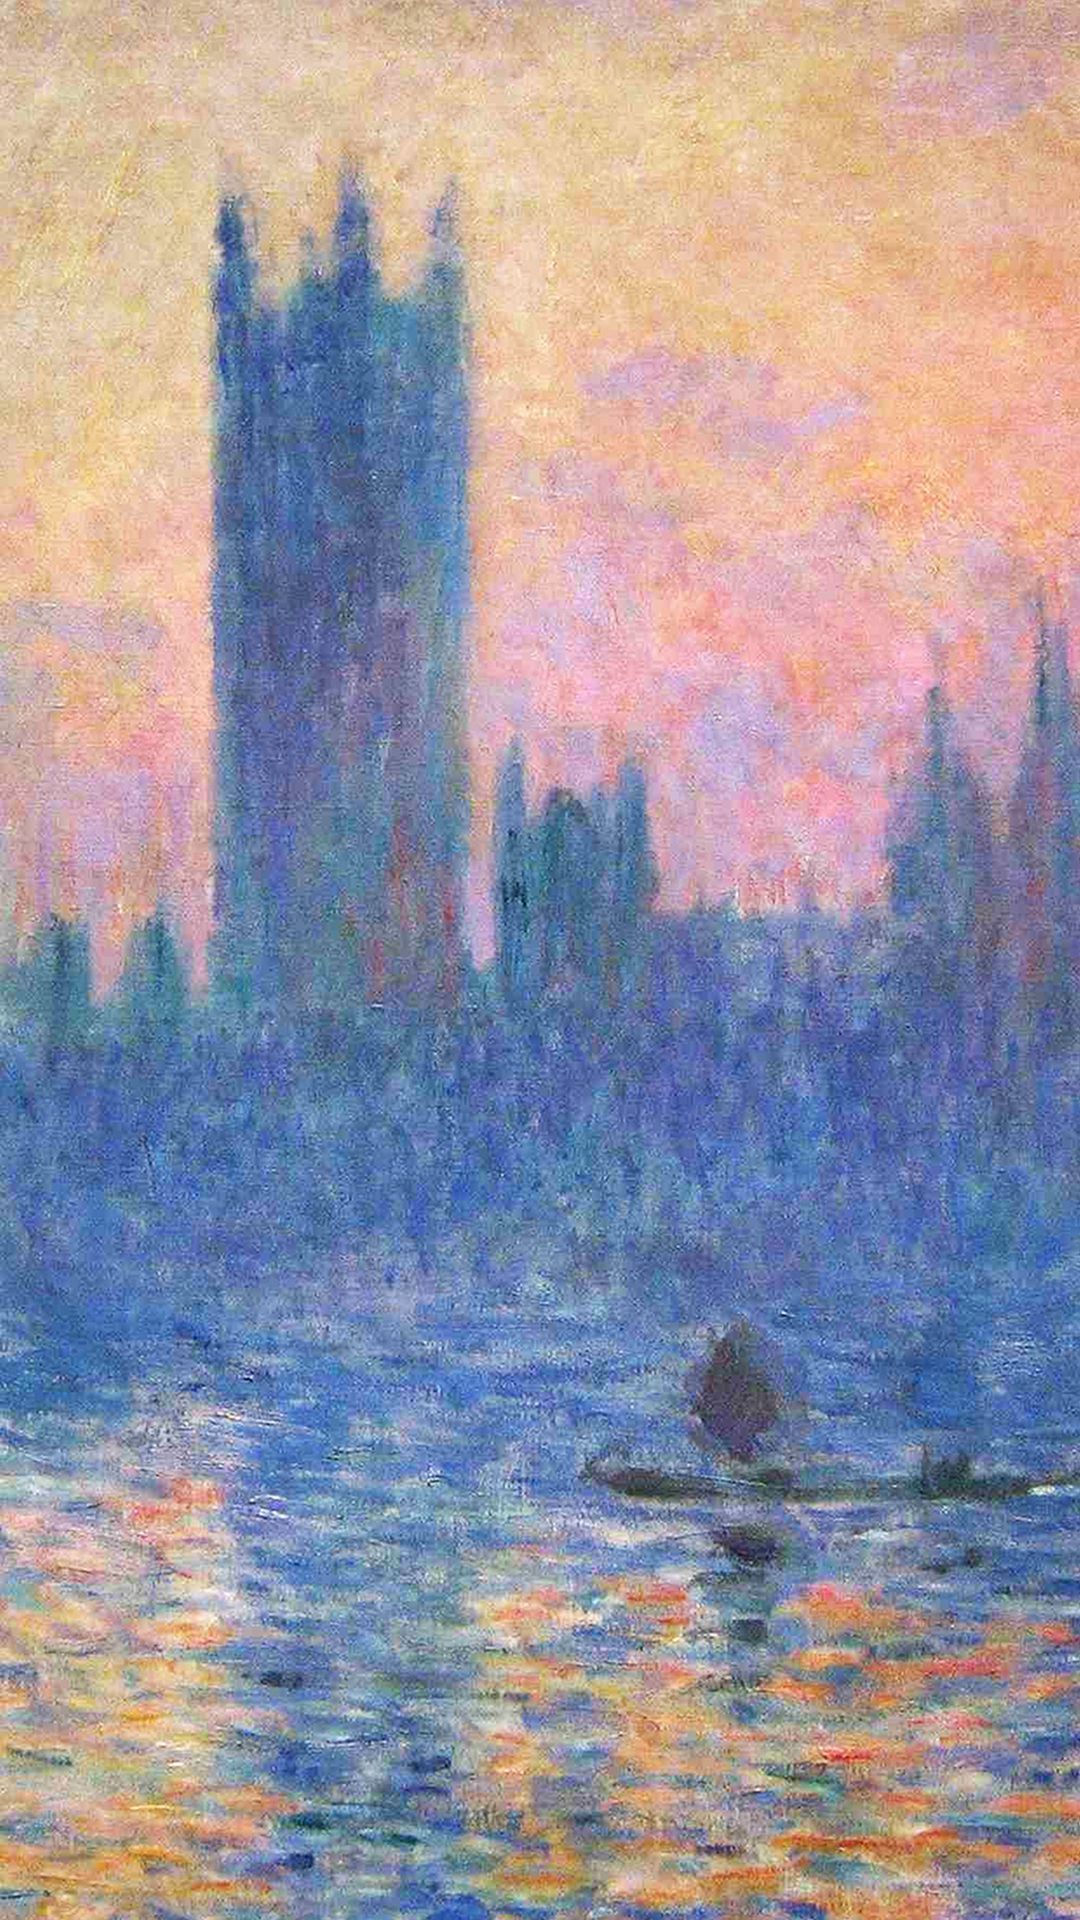 Claude Monet Classic Painting Art Sunset Pattern iPhone 6 Wallpaper Download. iPhone Wallpaper, iPad wa. Painting wallpaper, Art wallpaper iphone, Art wallpaper